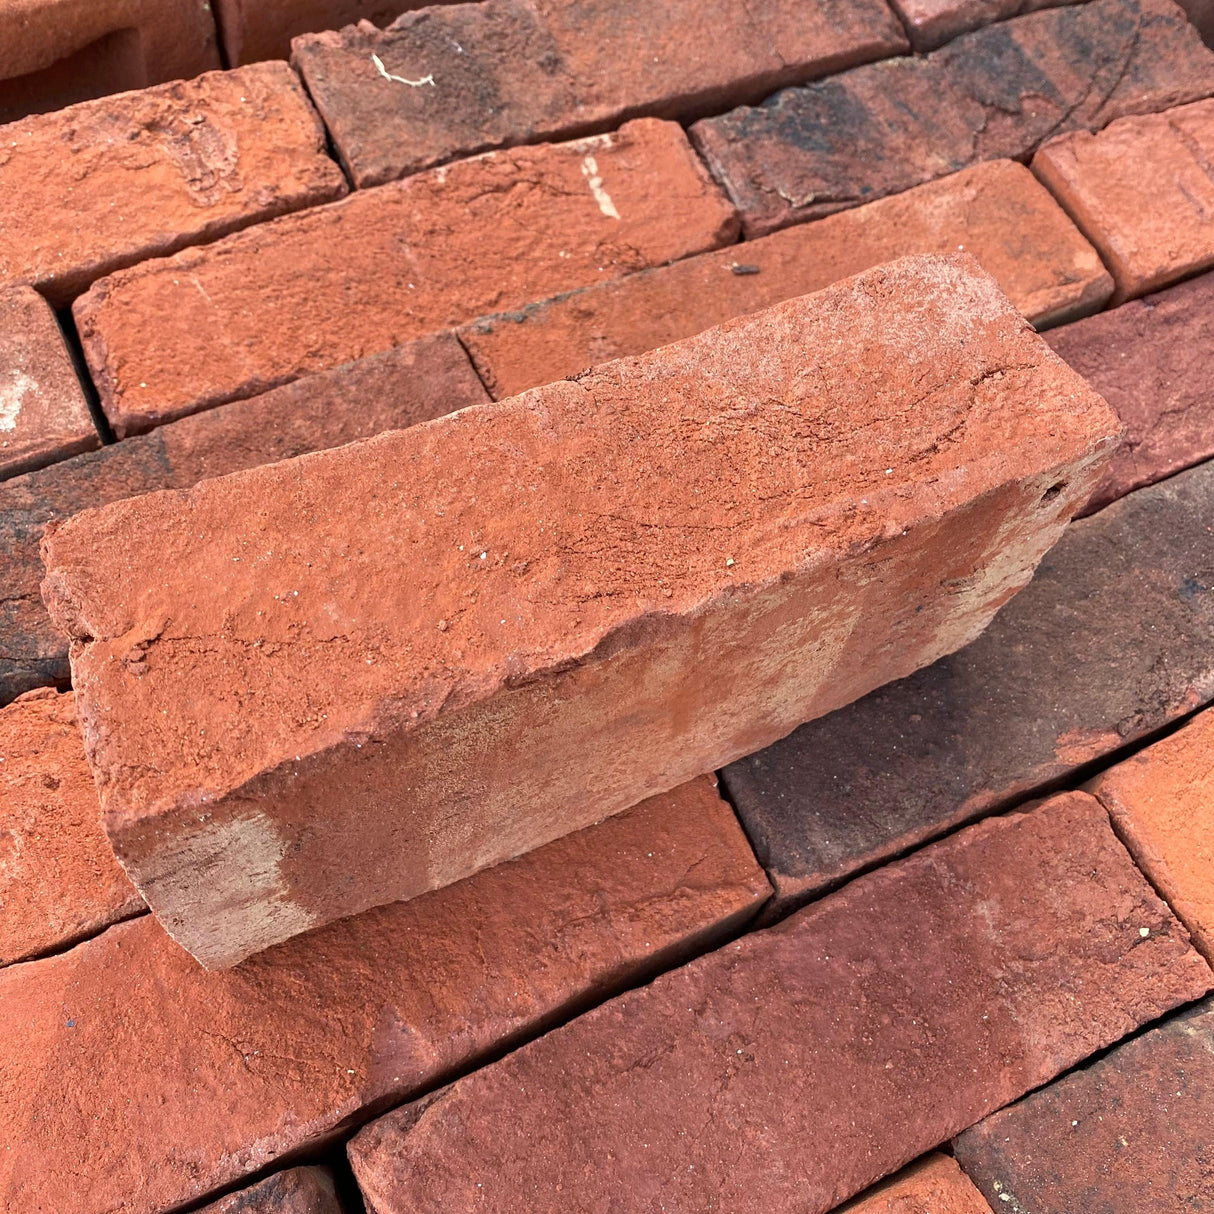 New Country Blend Bricks - Reclaimed Brick Company